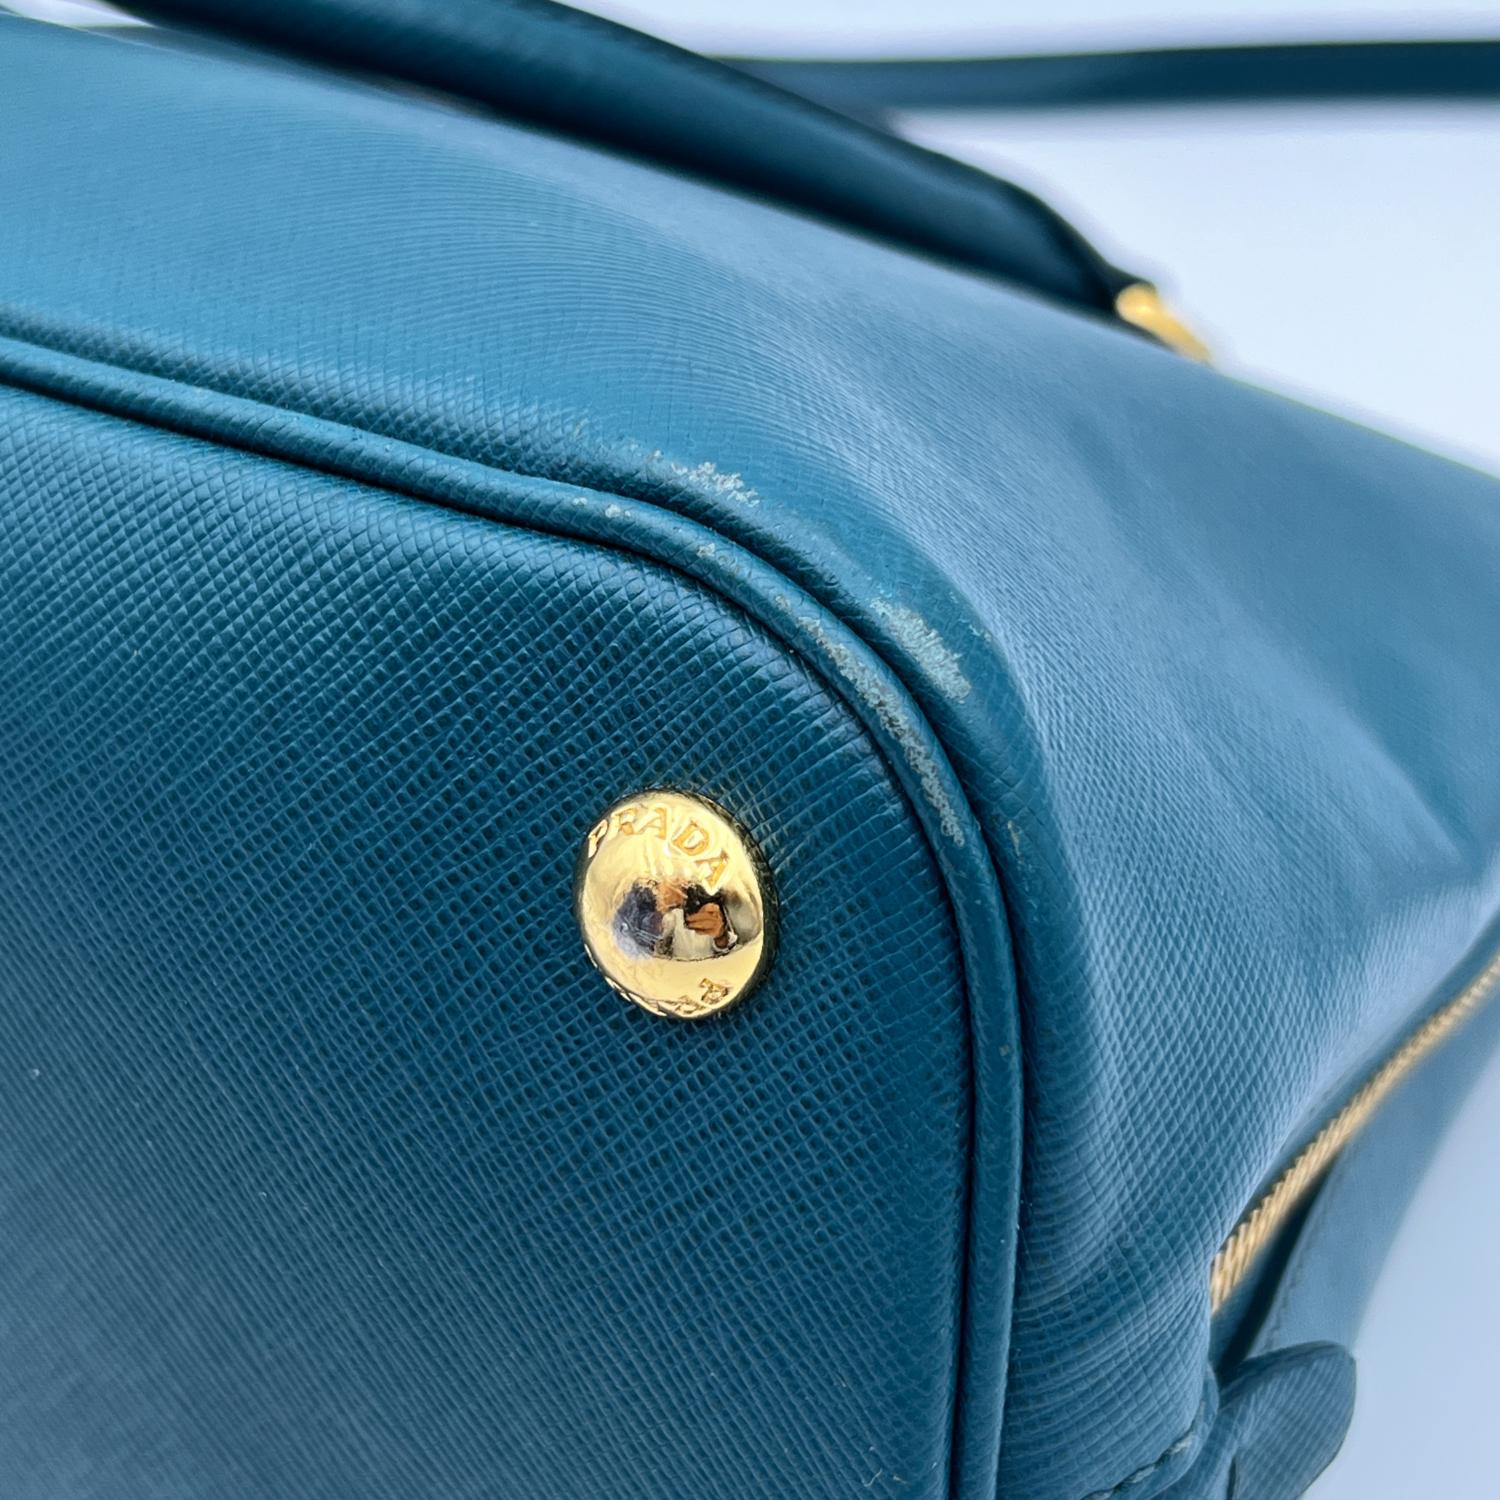 Prada Teal Saffiano Leather Promenade Tote Satchel Bag Handbag 1